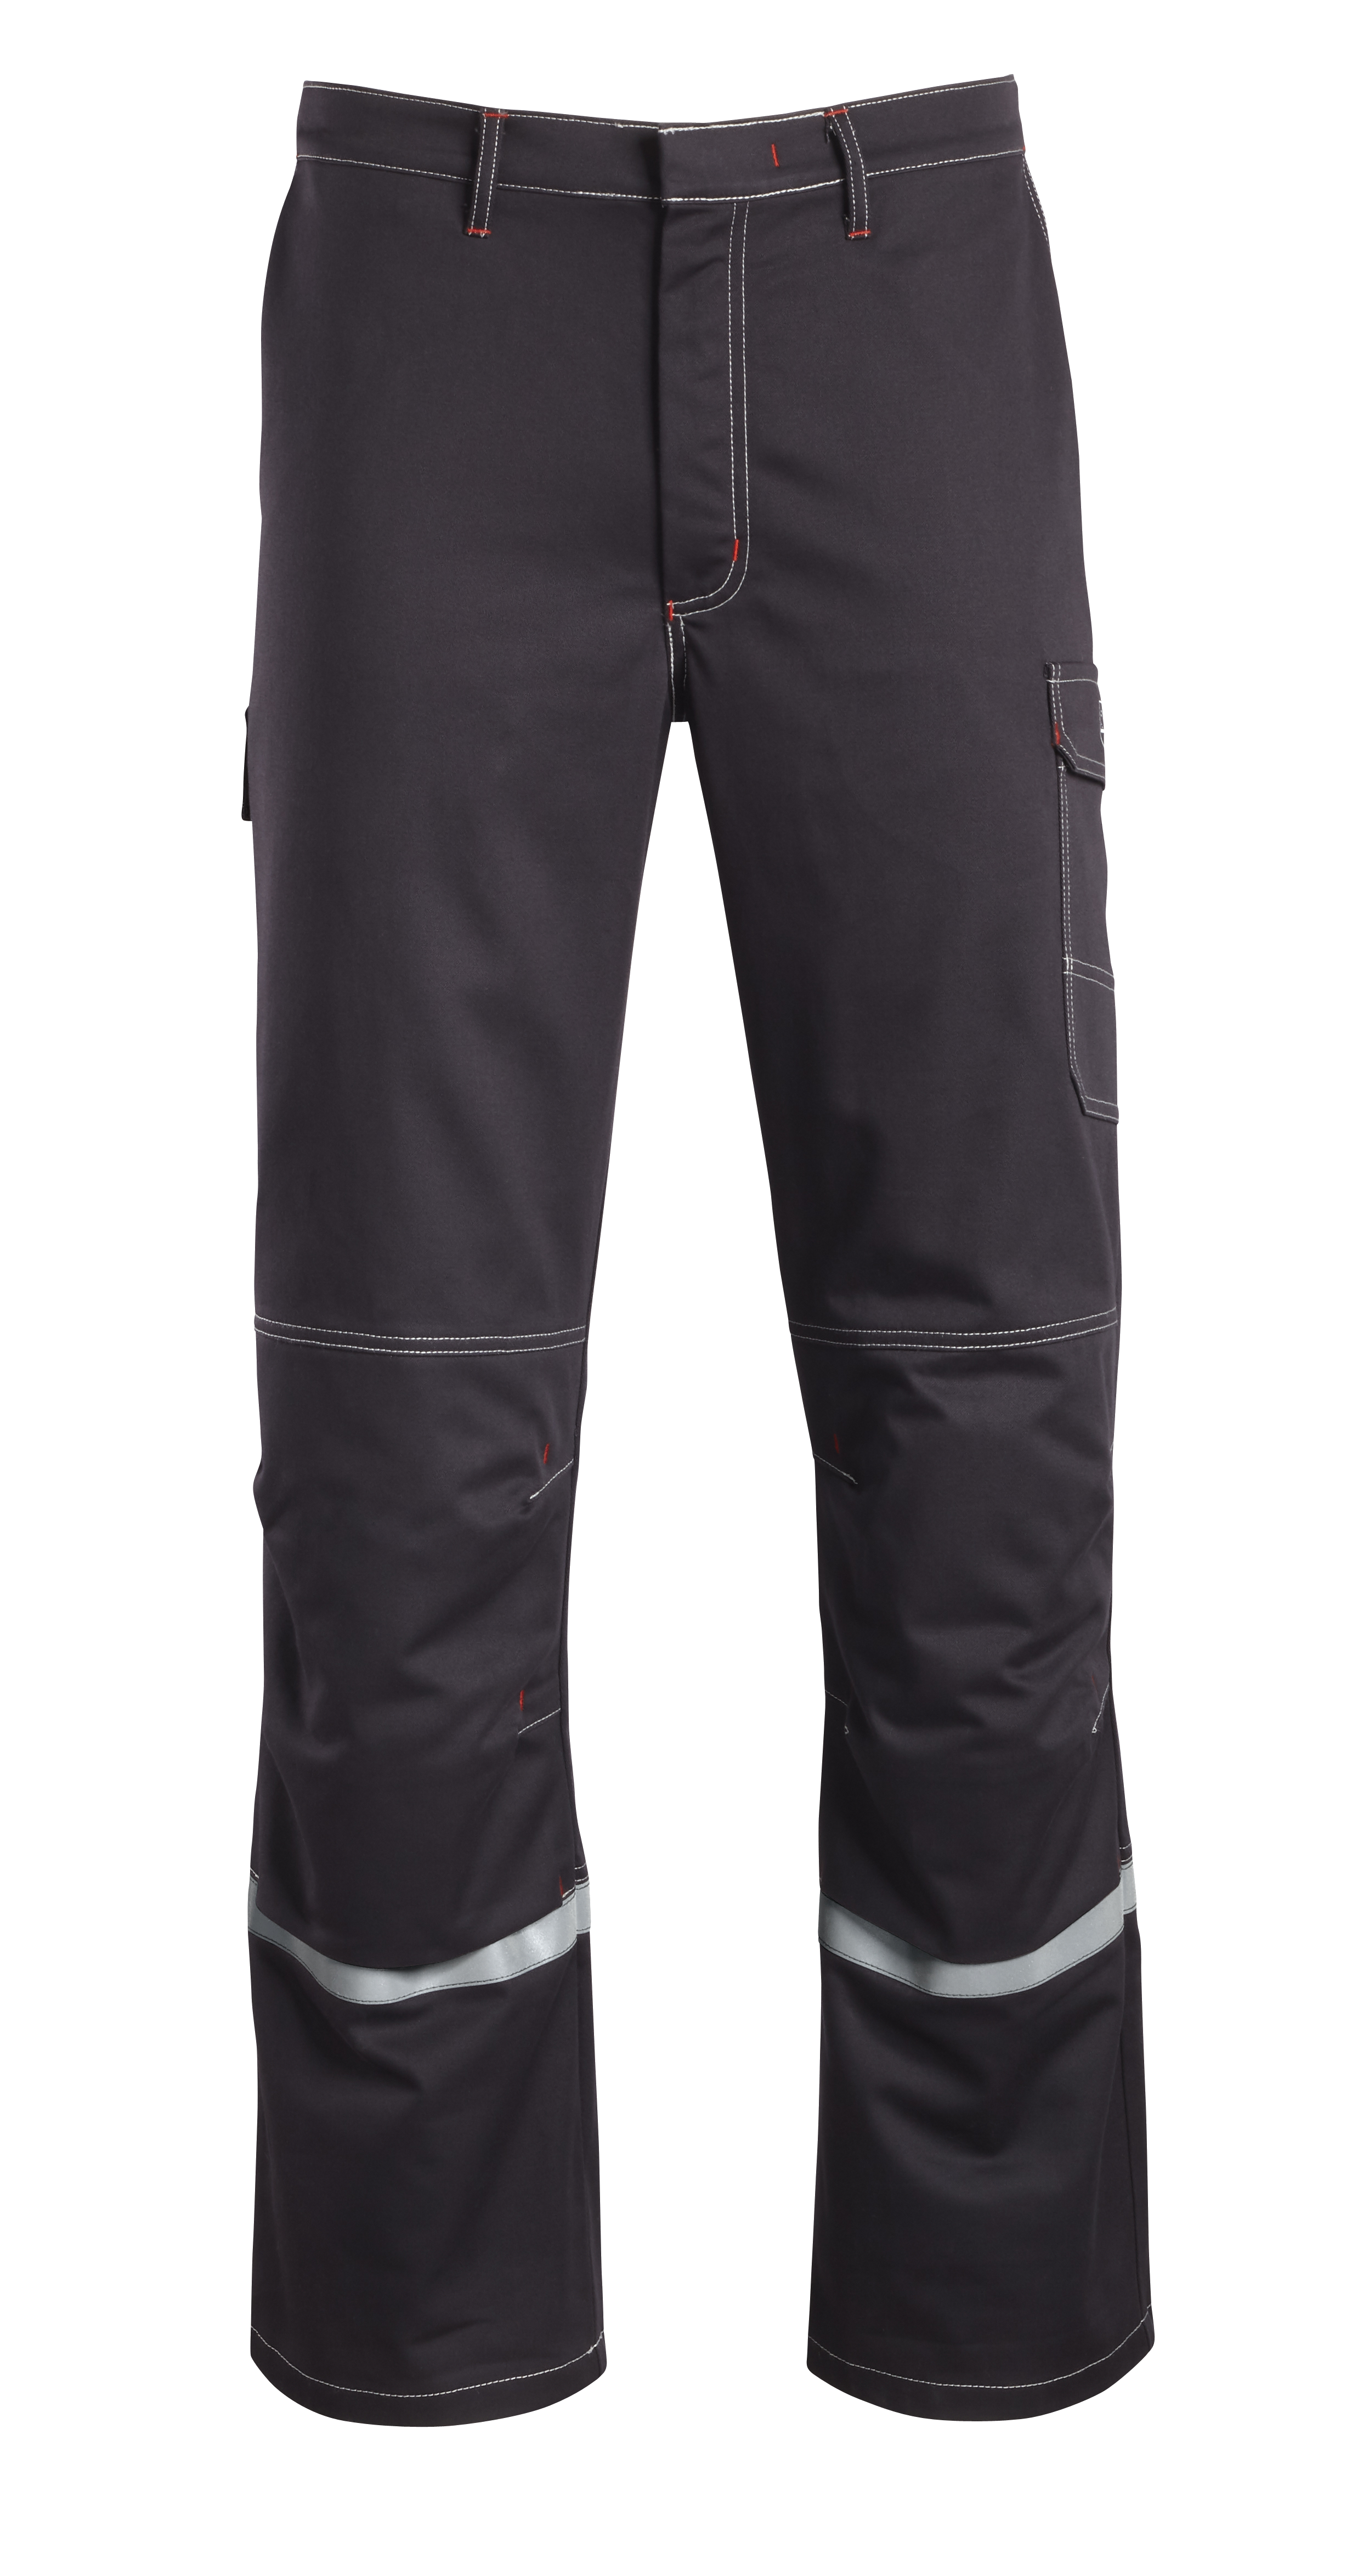 CWS Alpha Welding 2 Trousers Dark Grey w/ Kneepad Pockets 